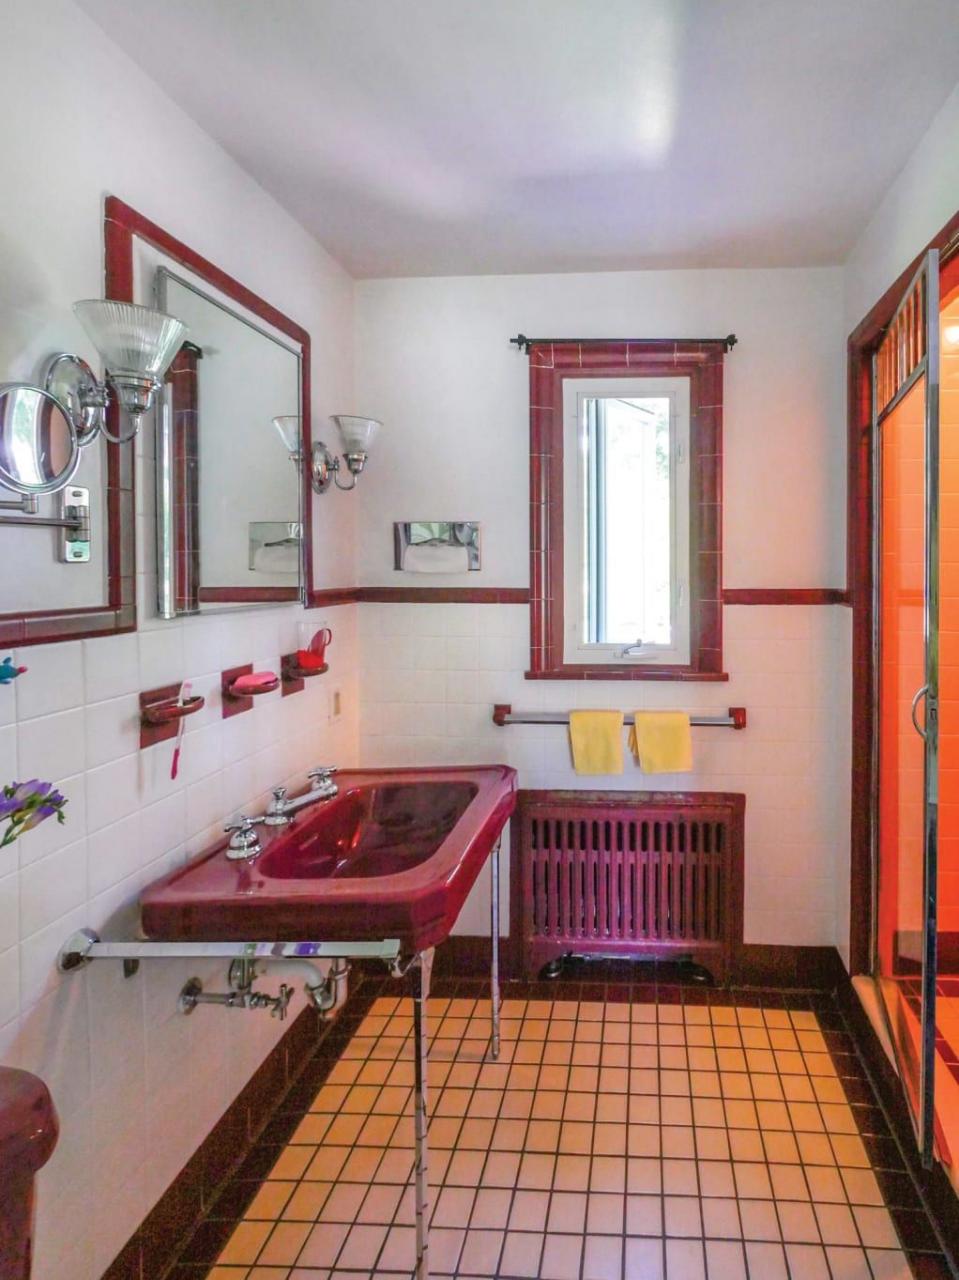 1920s40s Baths (With images) Burgundy bathroom, Vintage bathrooms